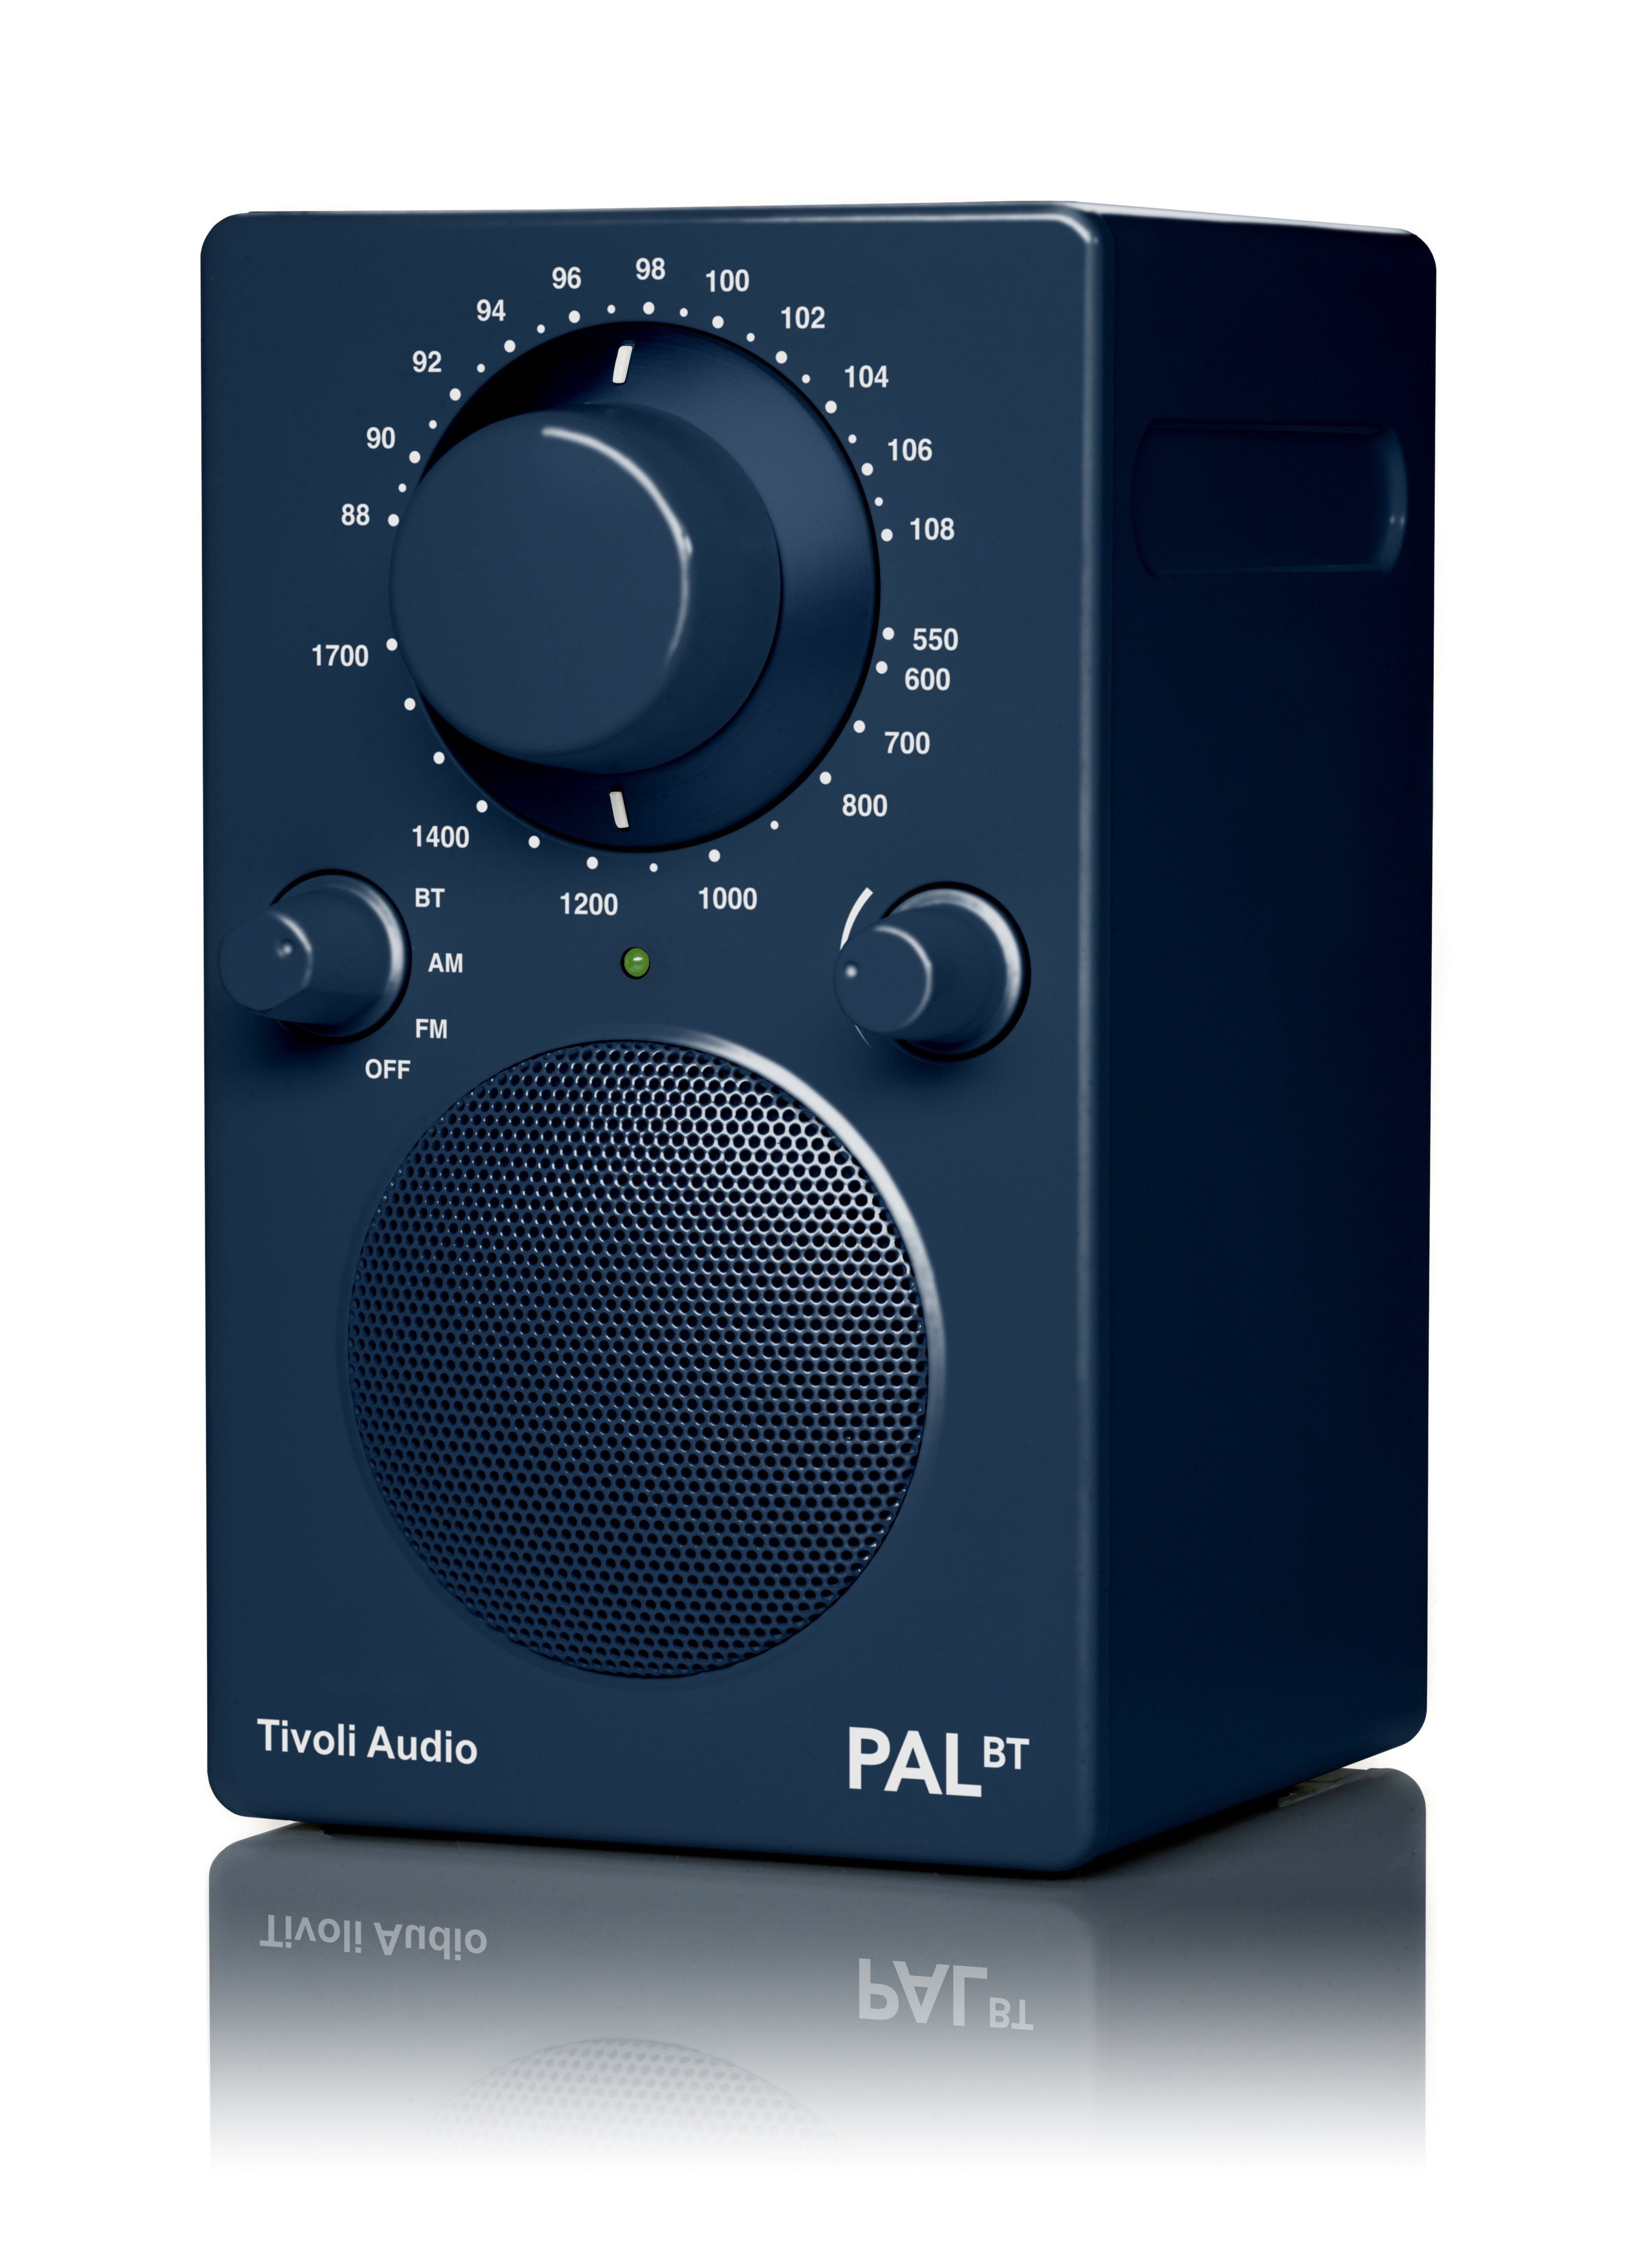 Tivoli Audio PAL BT Radio Akku-Betrieb) (FM-Tuner, Bluetooth-Lautsprecher, tragbar, Blau Tisch-Radio